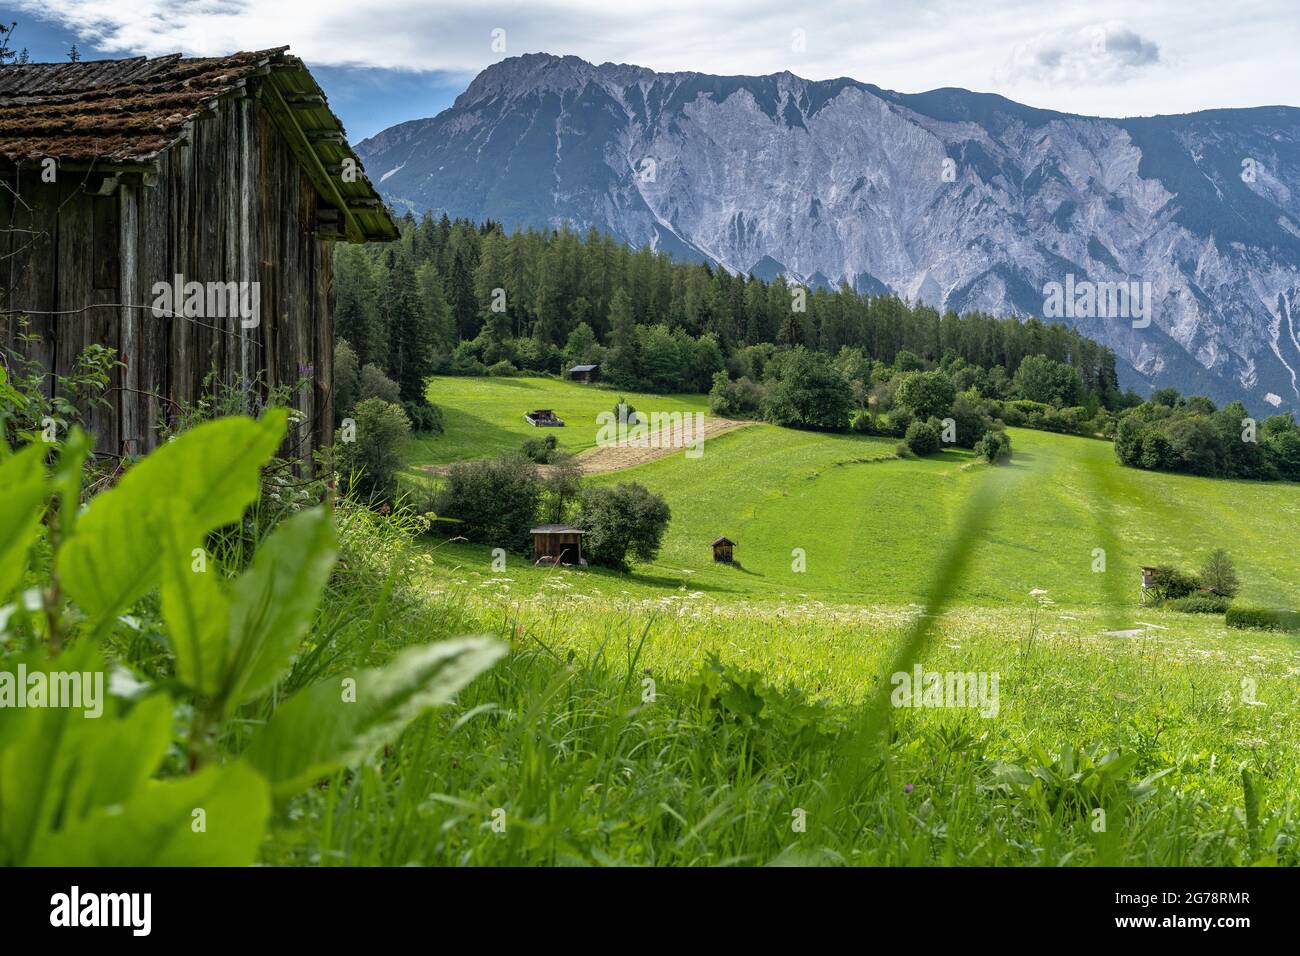 Europe, Austria, Tyrol, Ötztal Alps, Ötztal, Sautens, view over the mountain way to the mighty Tschirgant massif Stock Photo